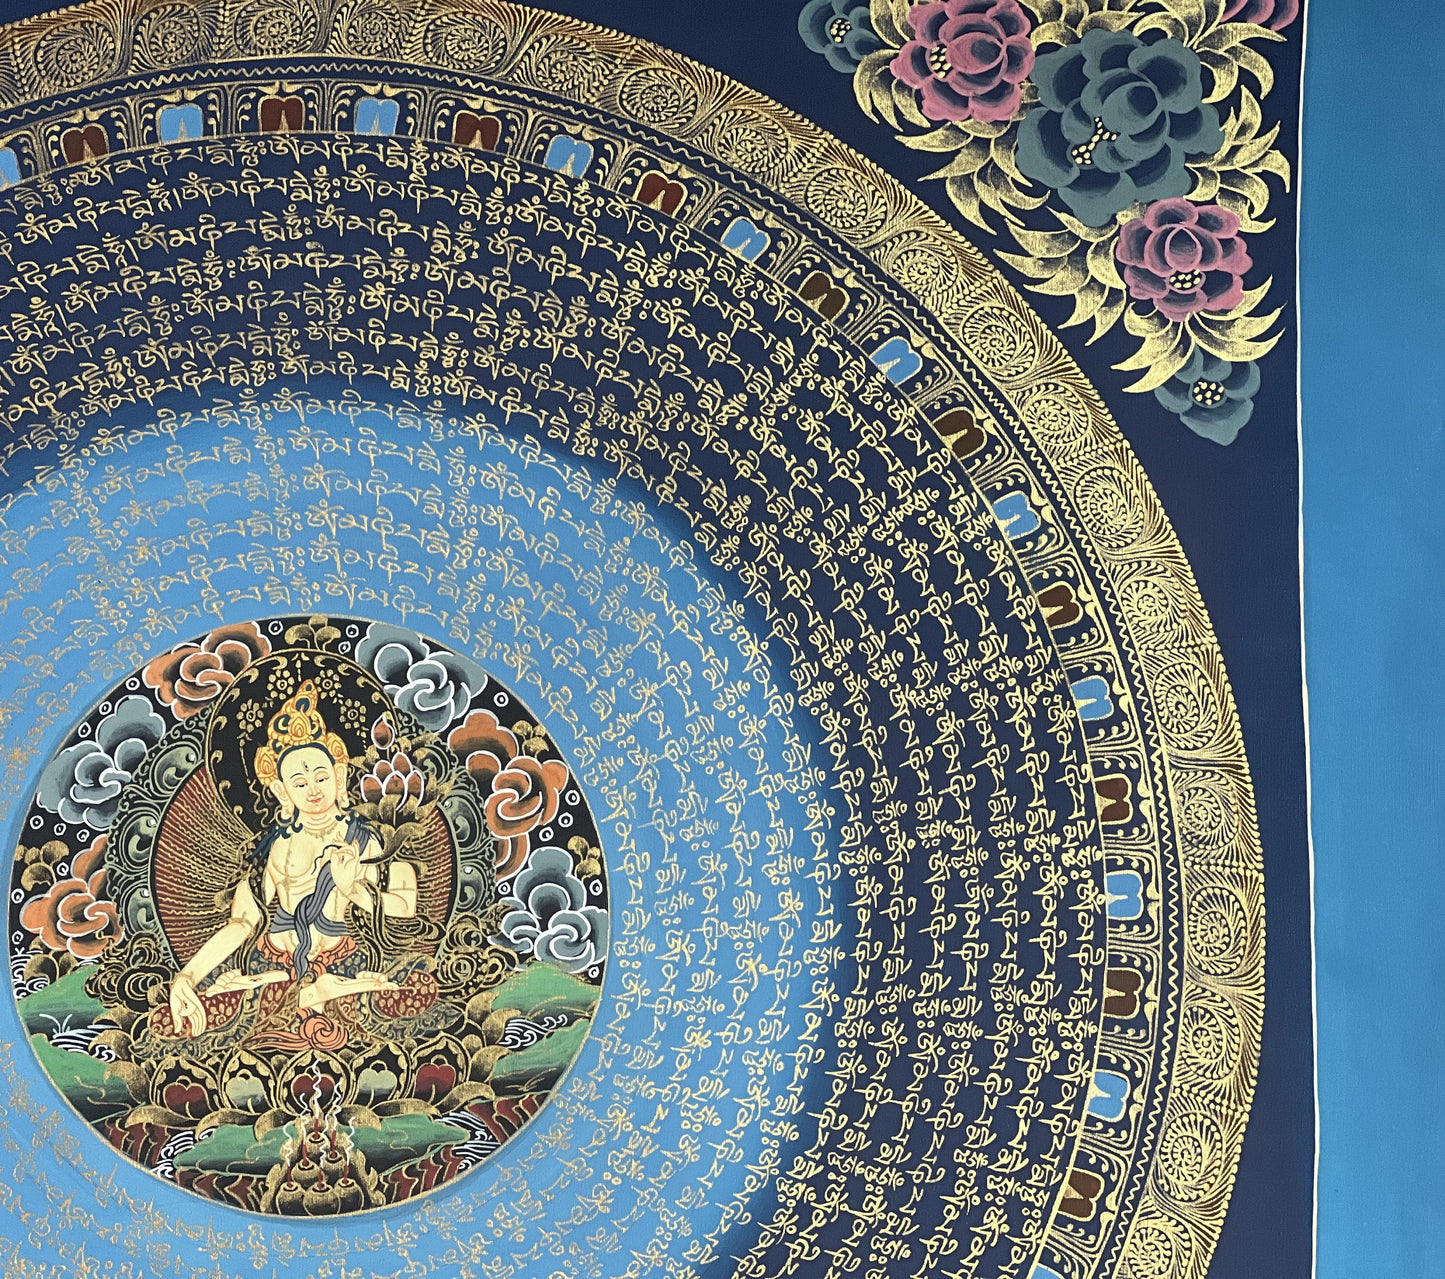 White Tara Om Mantra Mandala Tibetan Thangka Painting, Original Hand-Painted Art for Meditation, Healing, Home Decor